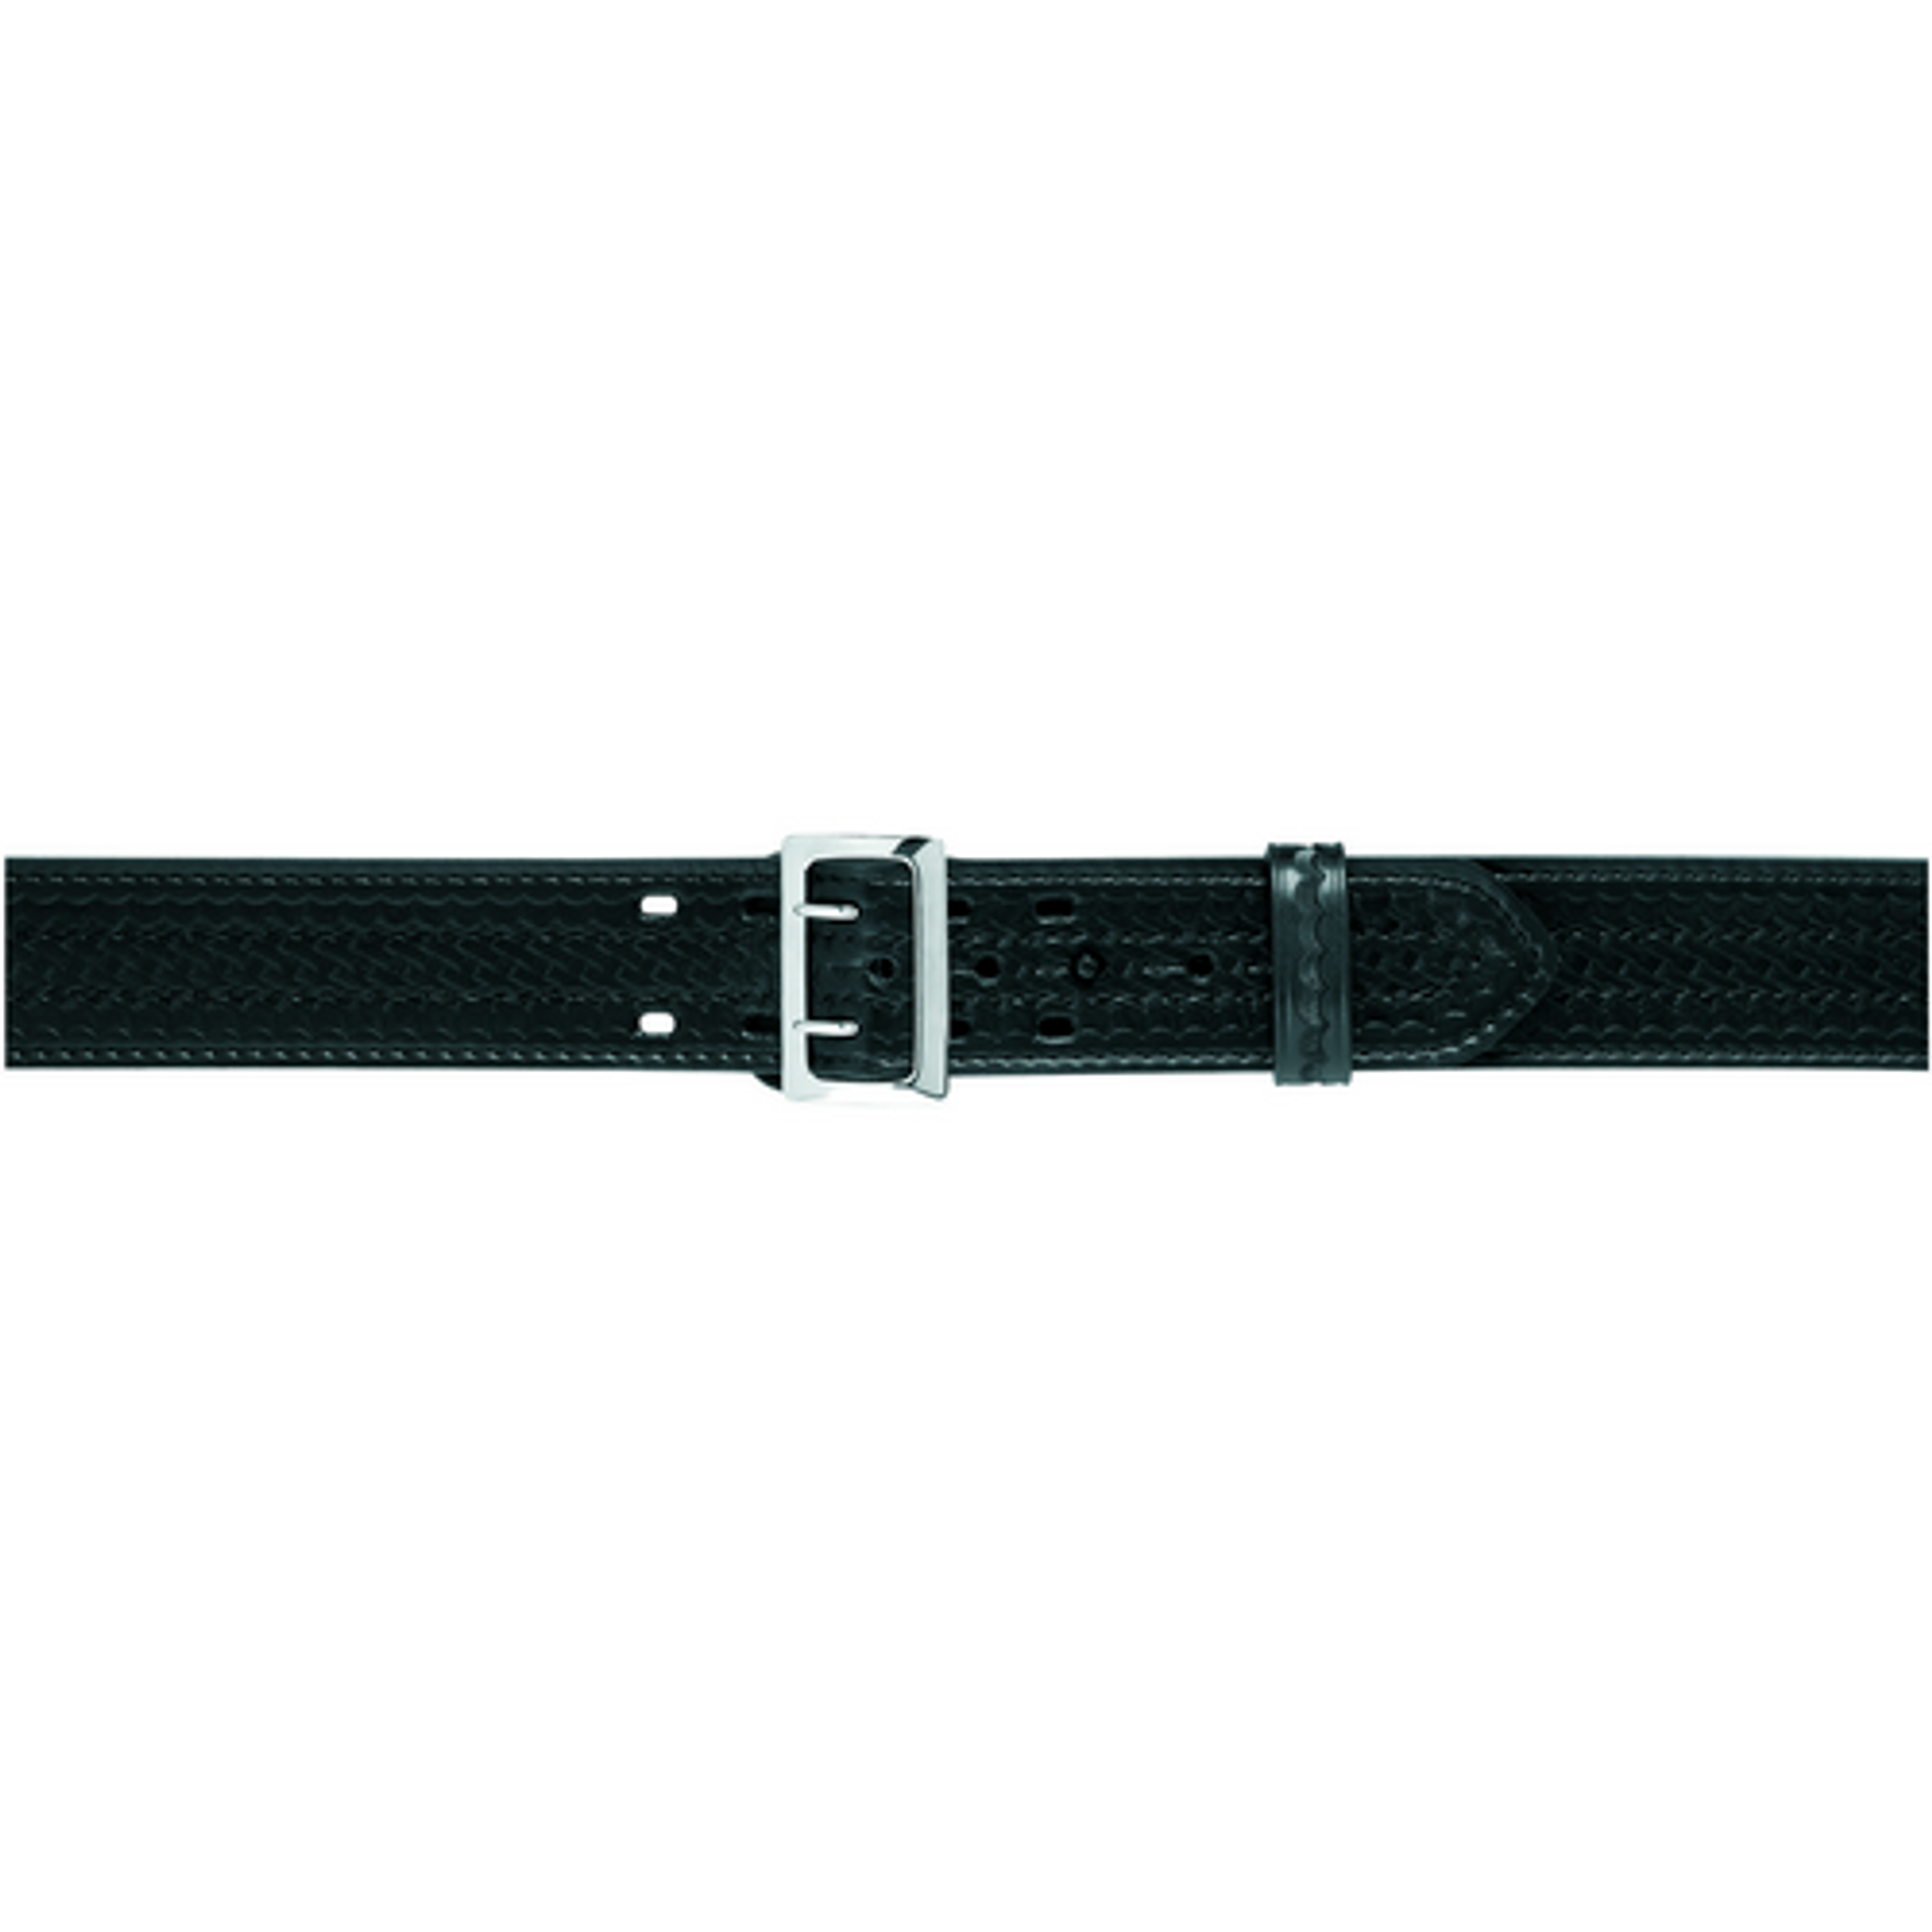 875 - Stitched Edge Sam Browne Duty Belt 2.25 (58mm) - KR875-42-6